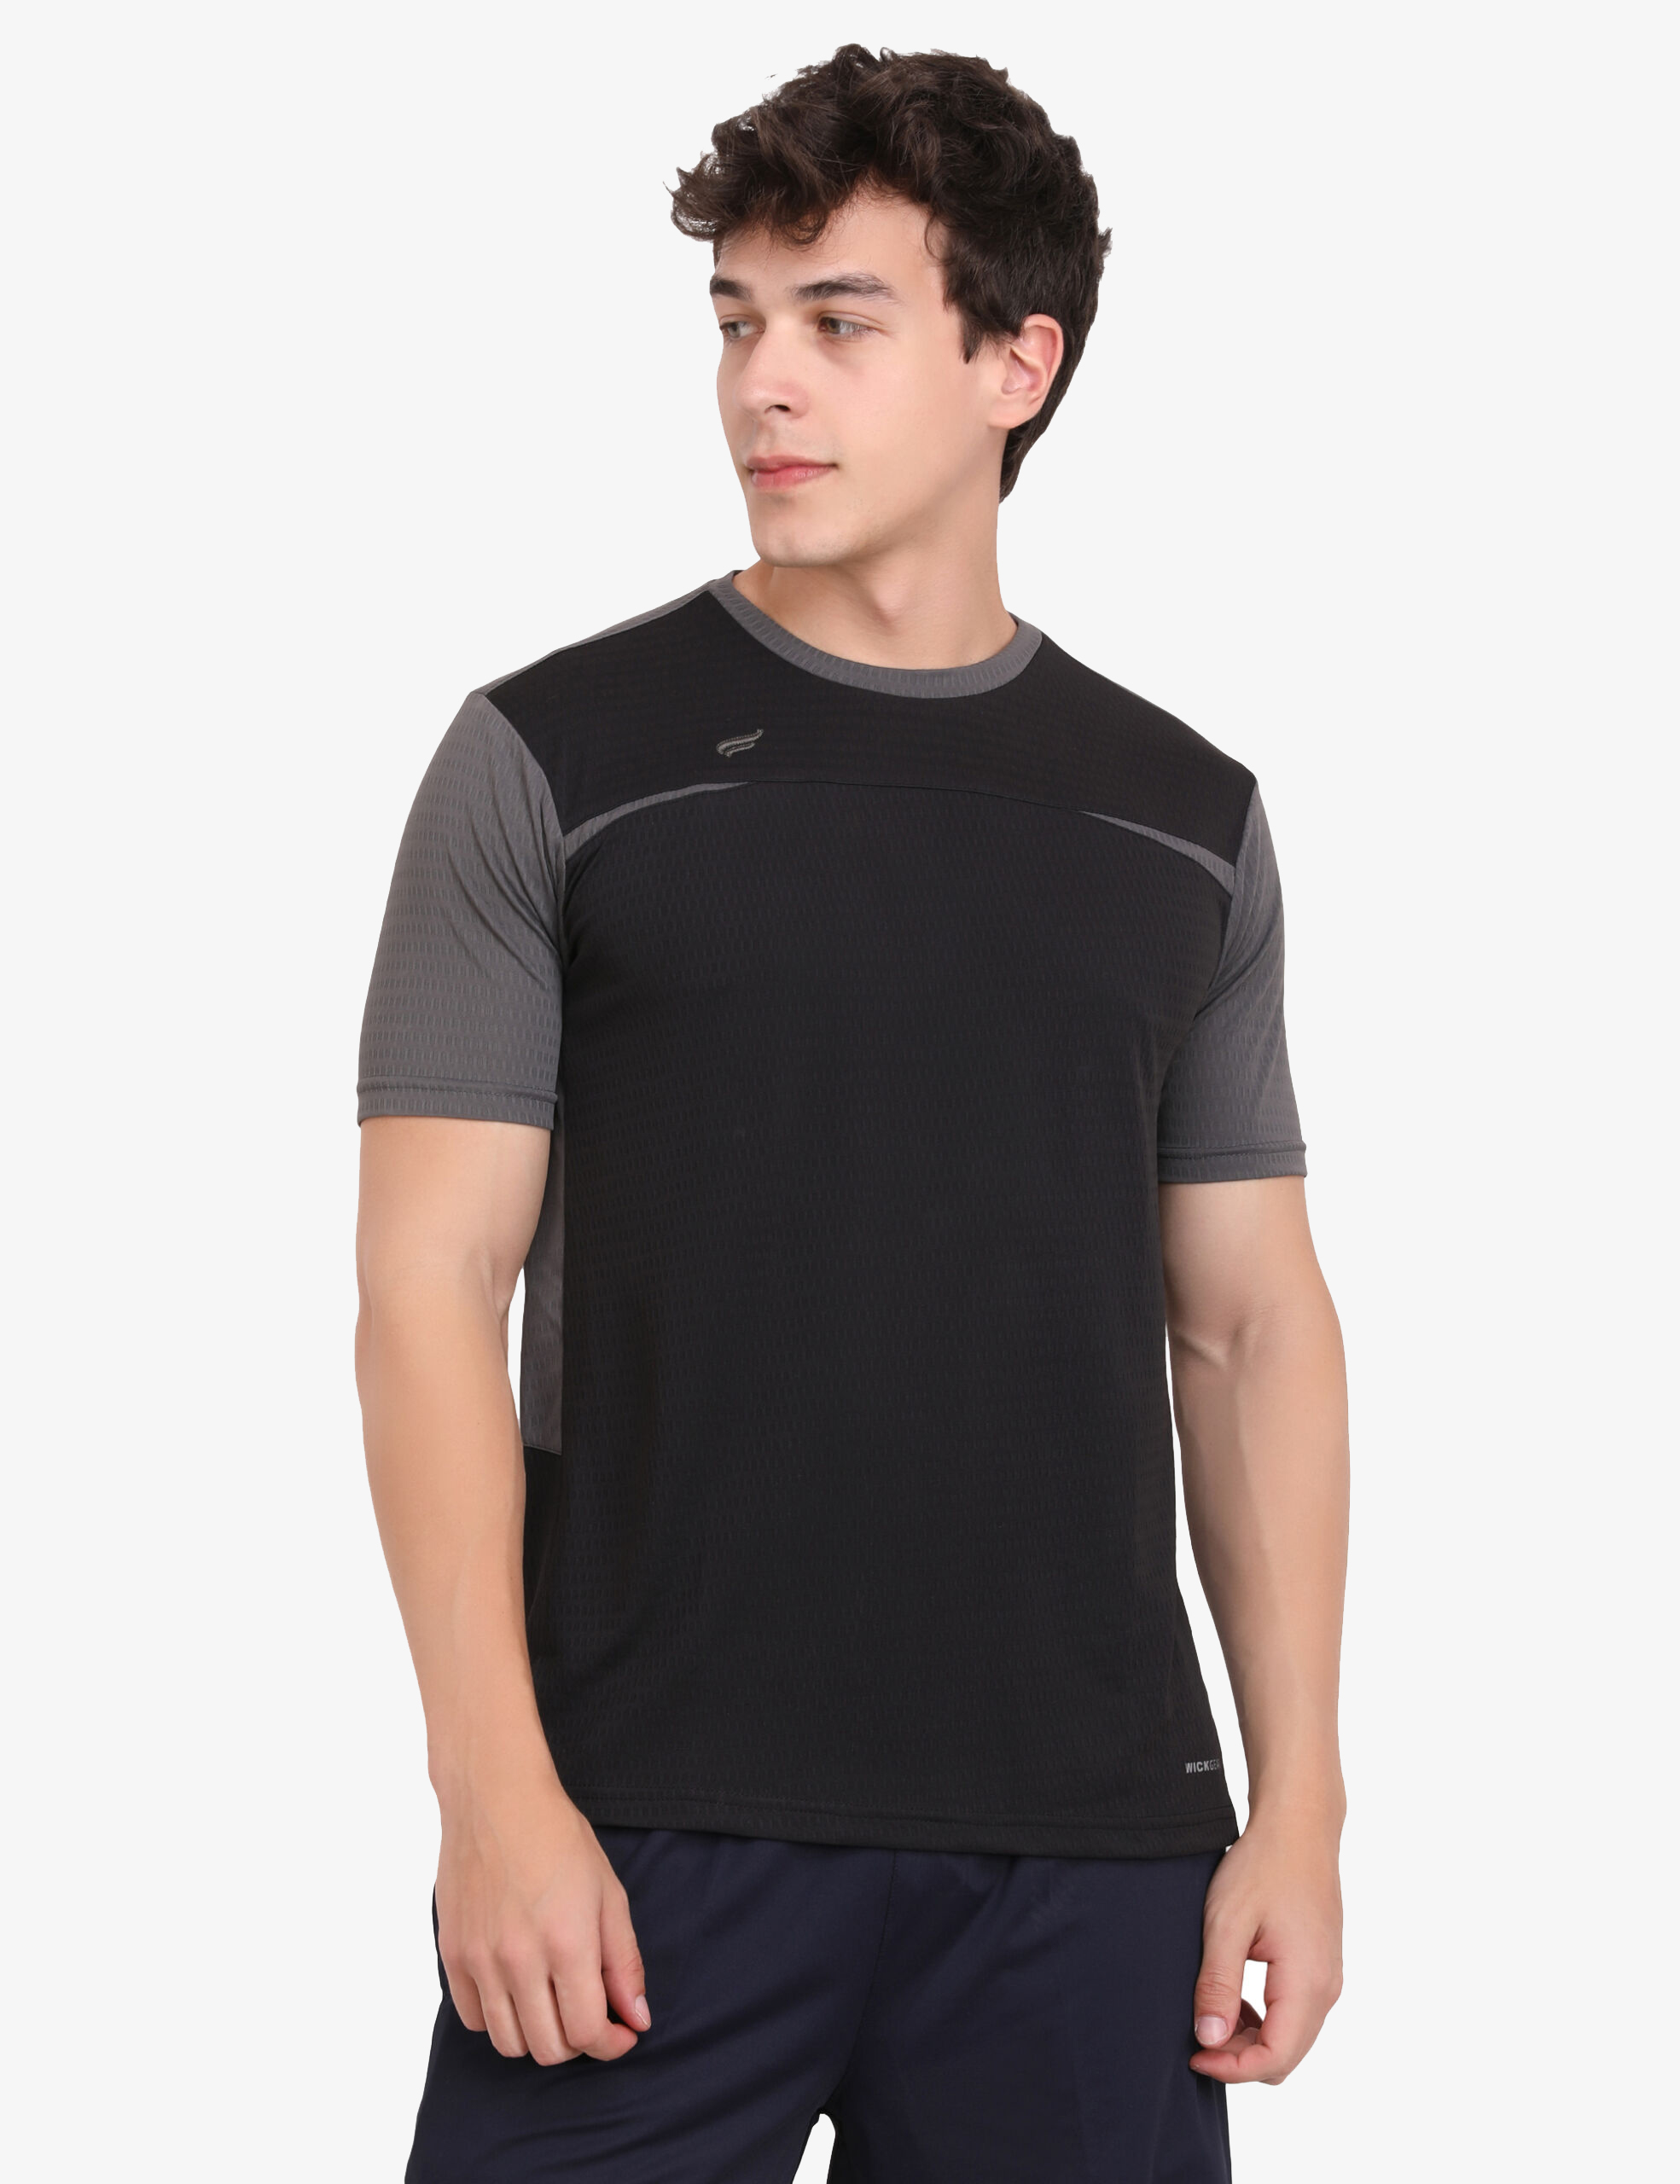 ASI Styler Black Sports T-shirt for Men